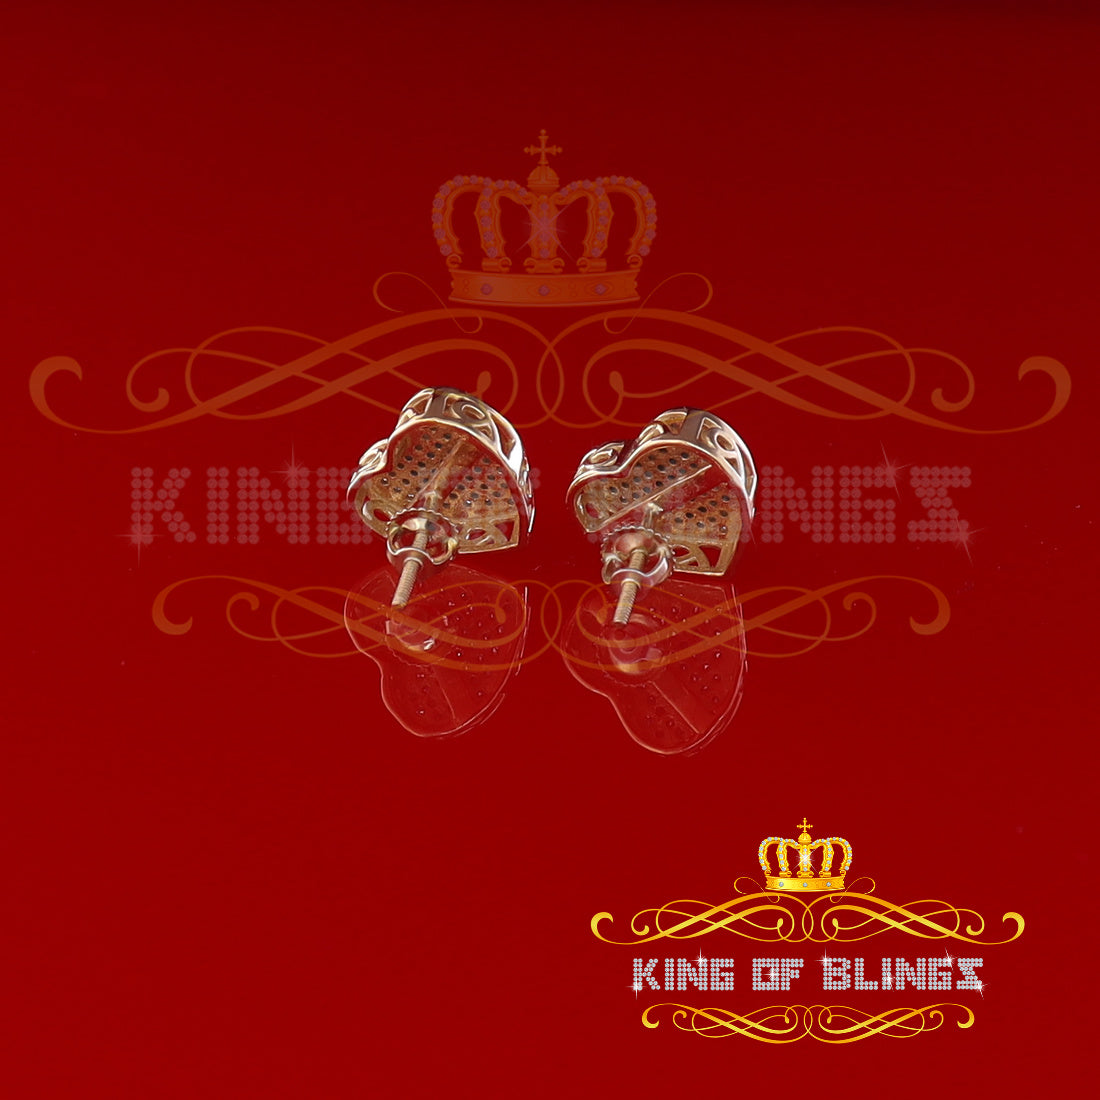 King of Blings-Micro Pave 0.25ct Real Diamonds 925 Yellow Silver Women's & Men's Heart Earrings KING OF BLINGS